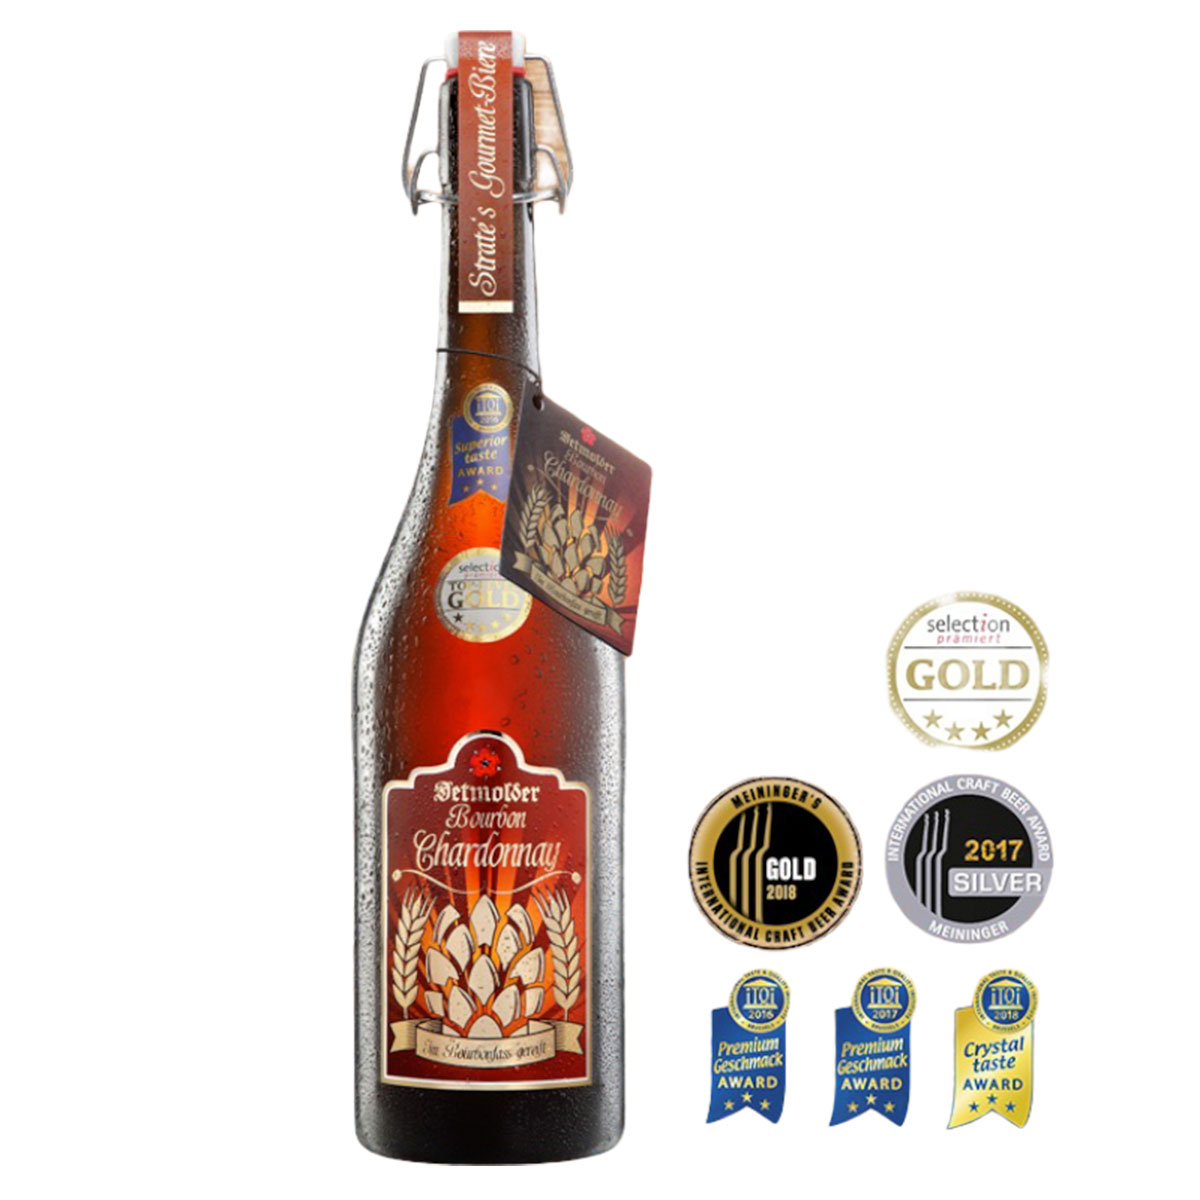 Doppelbockbier im Bourbonfass gereift - Detmolder Bourbon Chardonnay 7,5% Vol. 0,75l